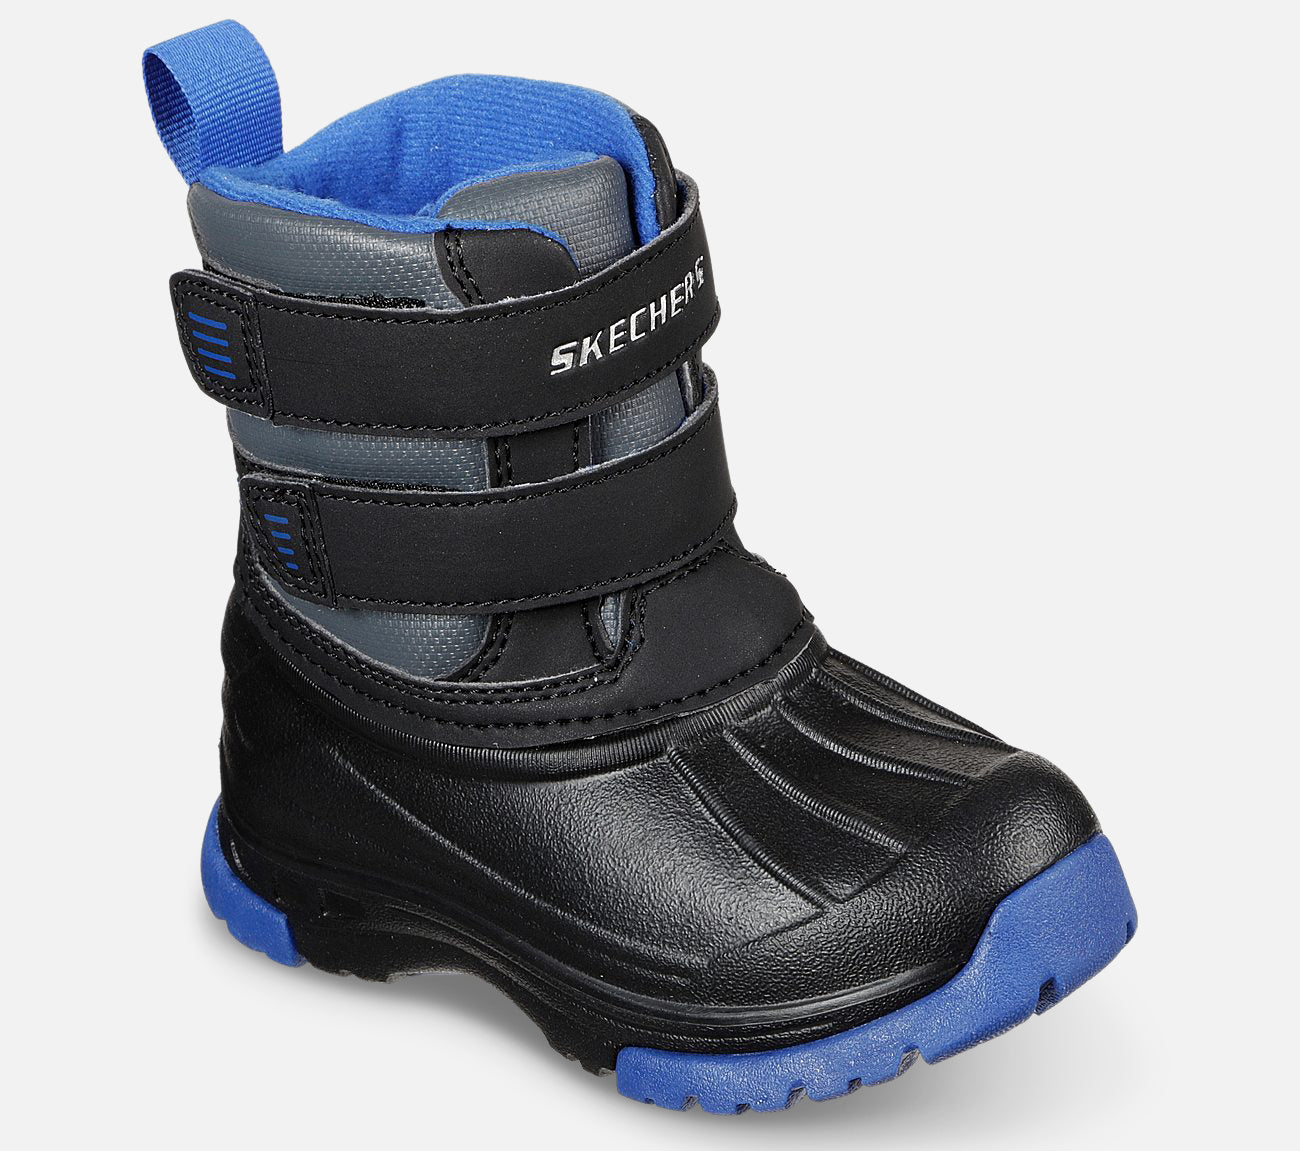 Snow Slopes - Hydro-Blitz - Waterproof Boot Skechers